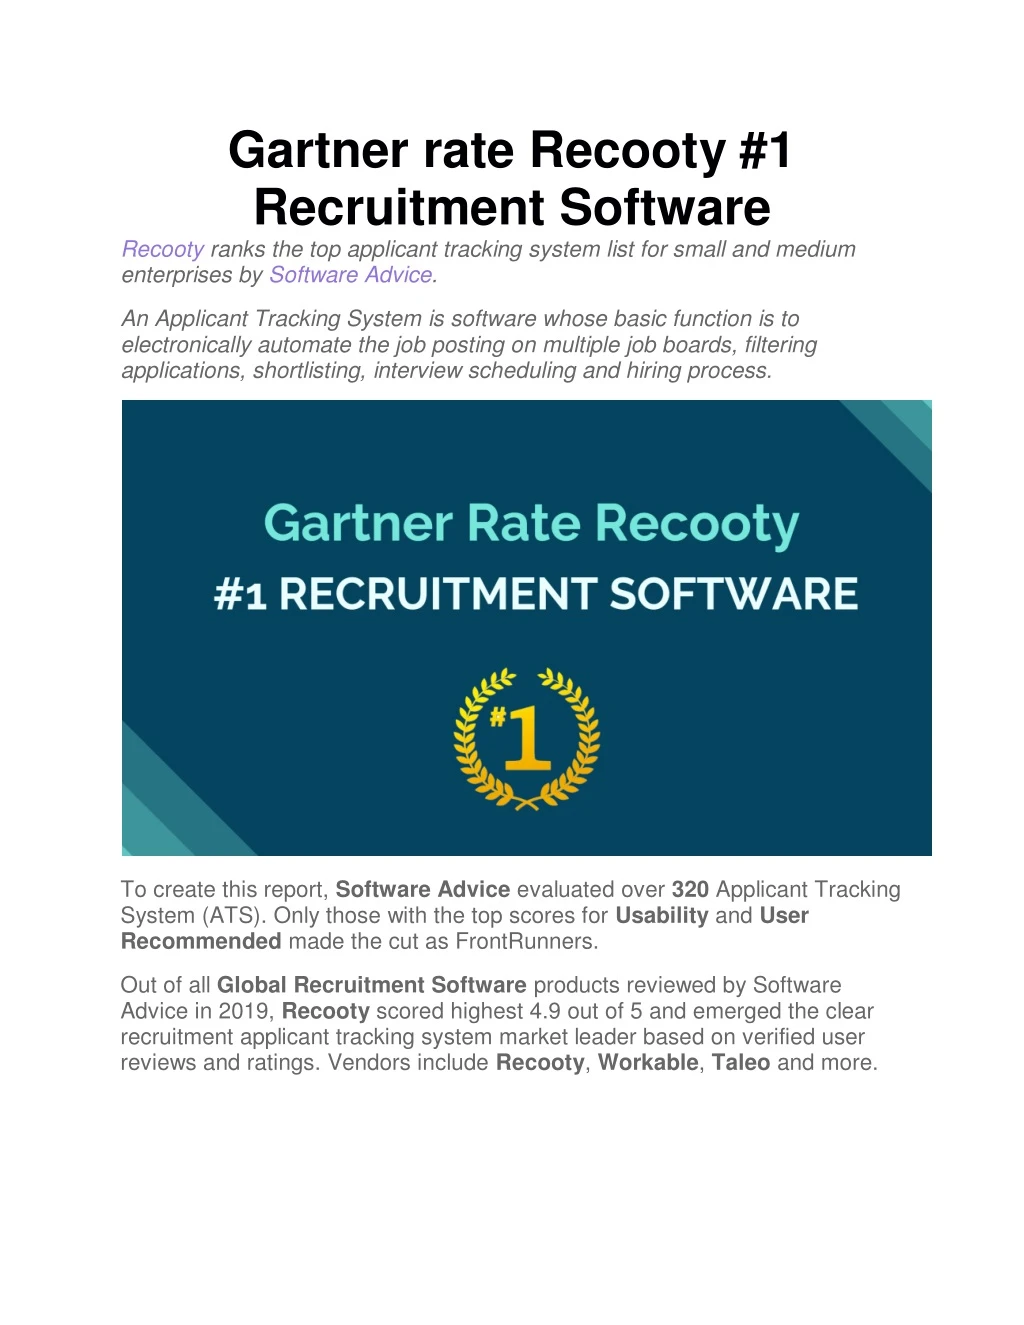 gartner rate recooty 1 recruitment software